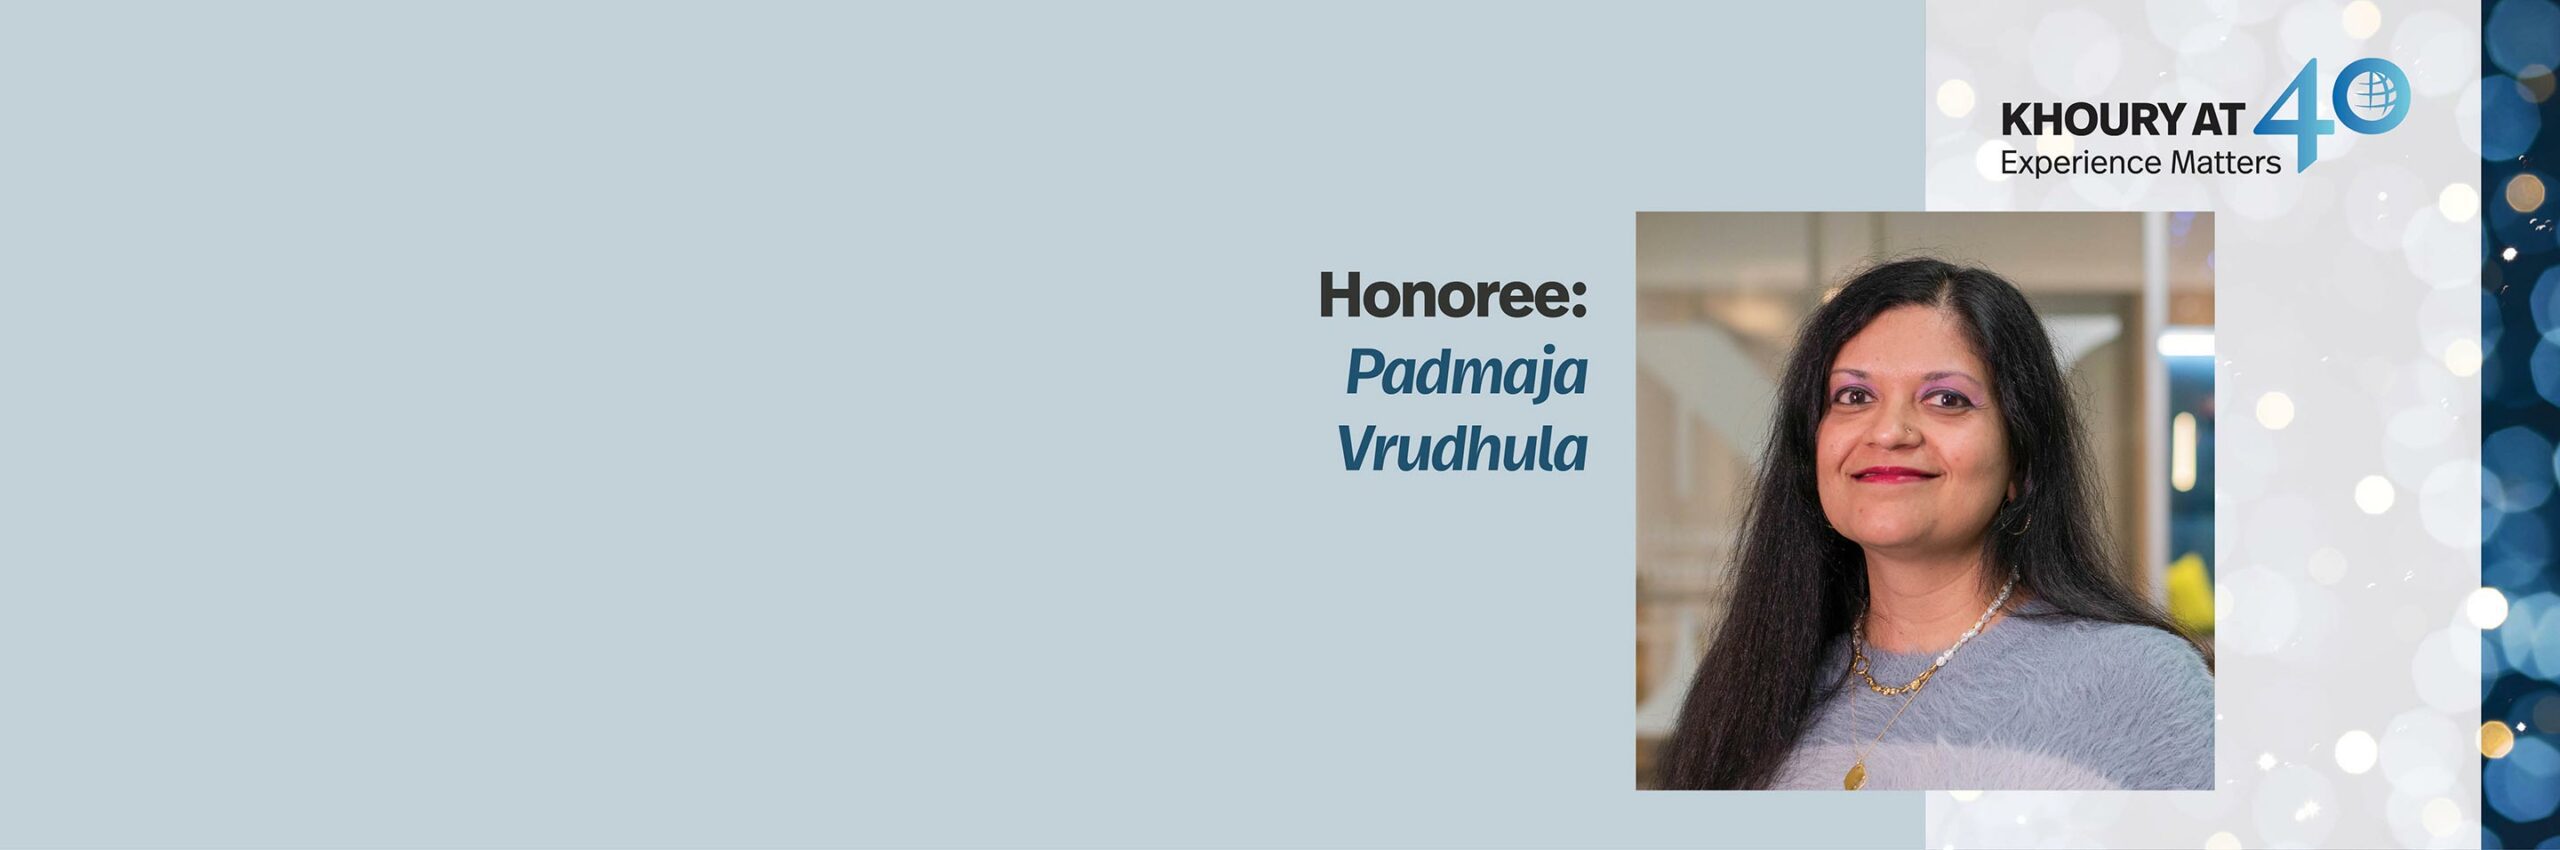 40 for 40 Honoree: Padmaja Vrudhula